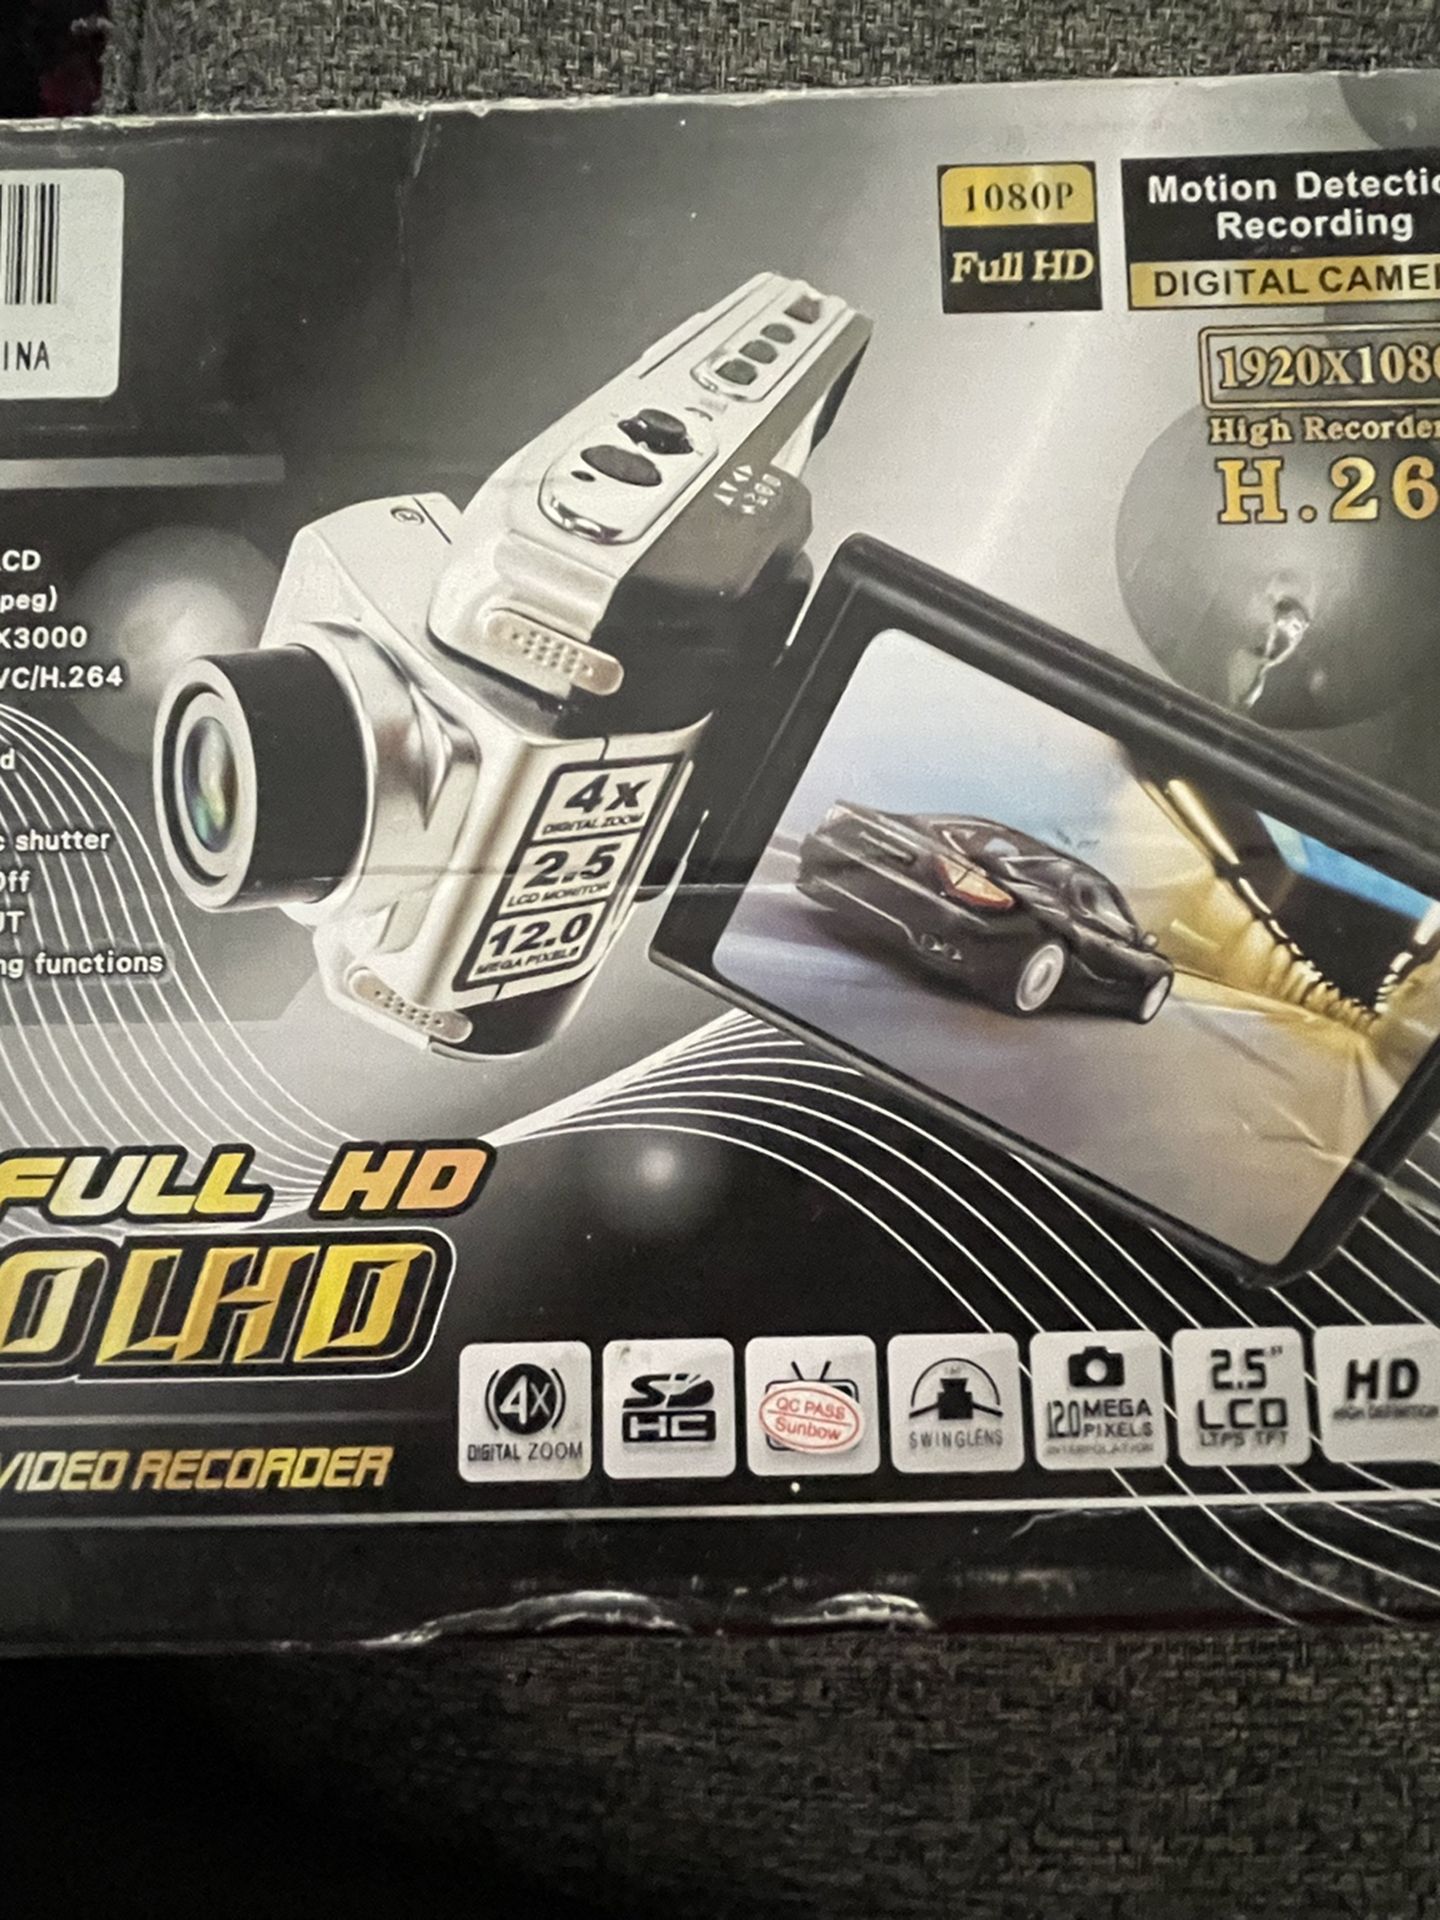 Full HD F 900 L HD high definition video recorder